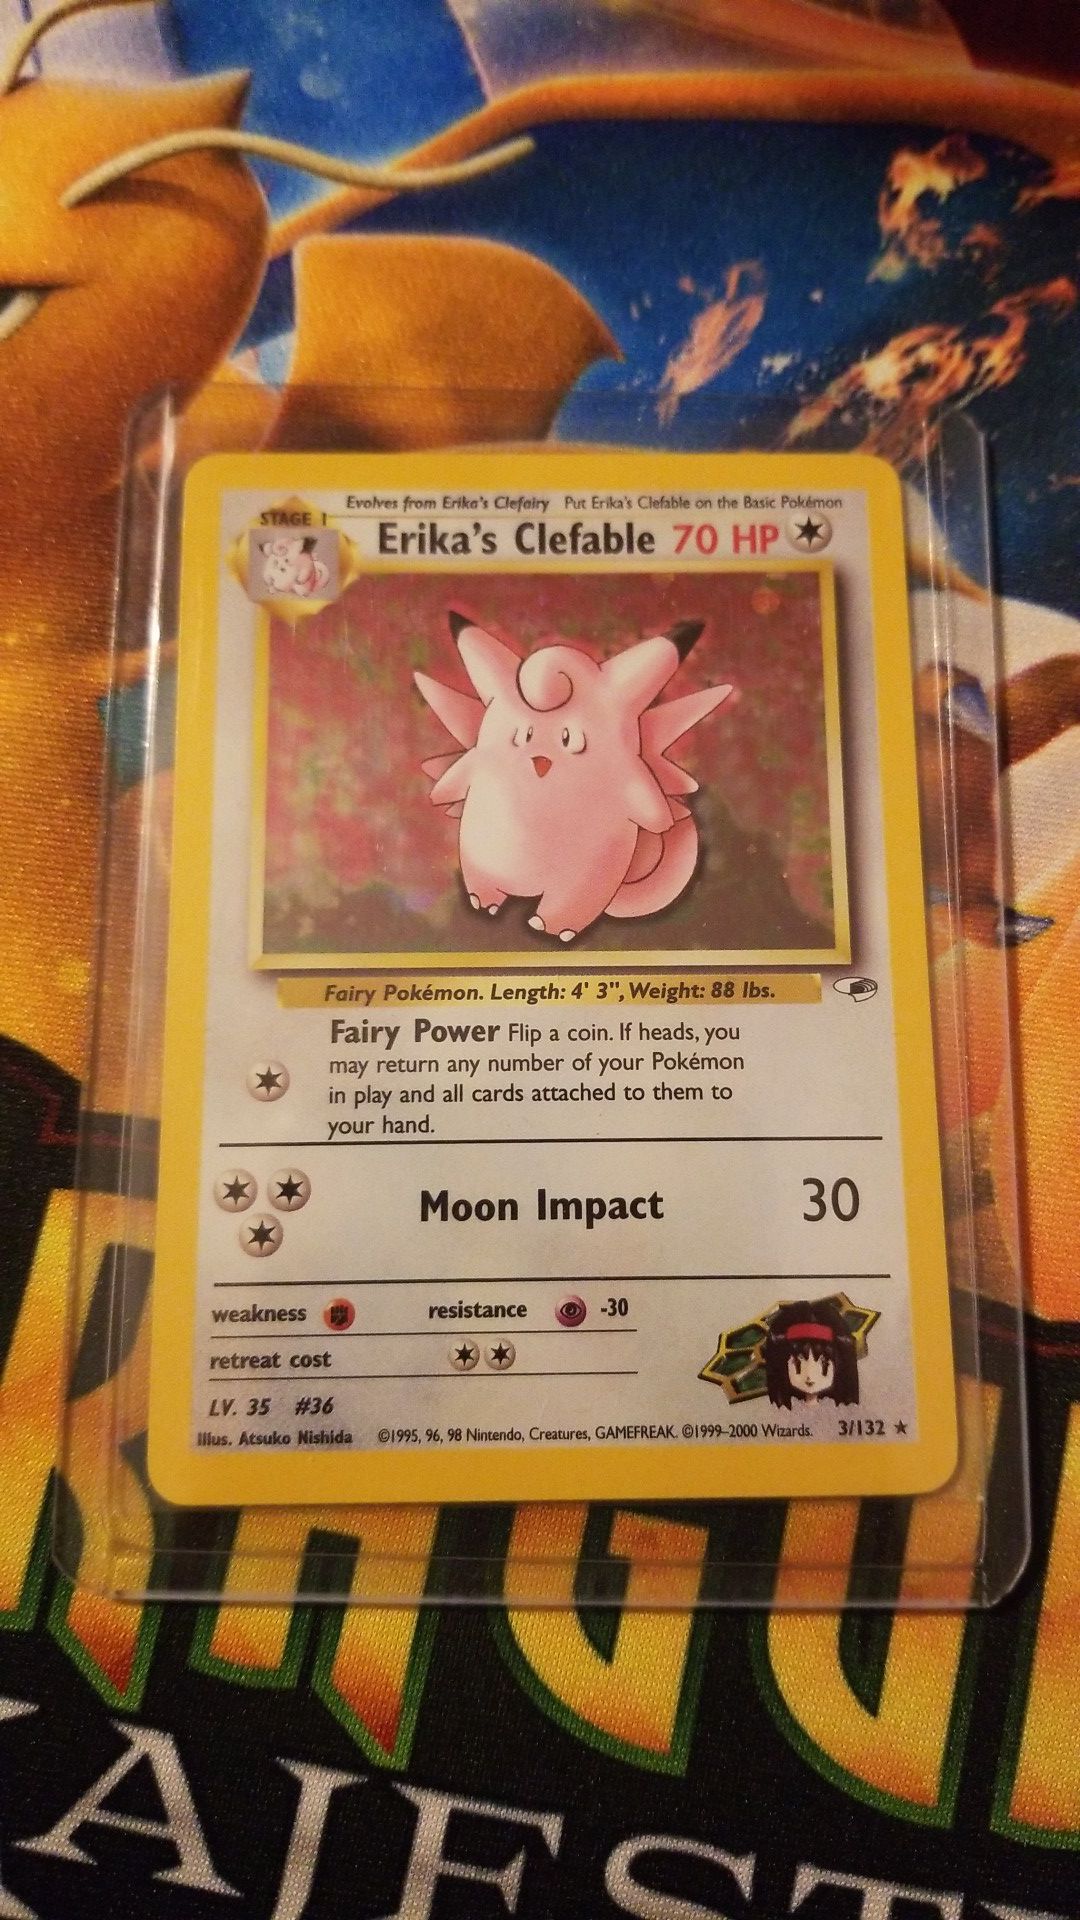 Erika's Clefable pokemon card